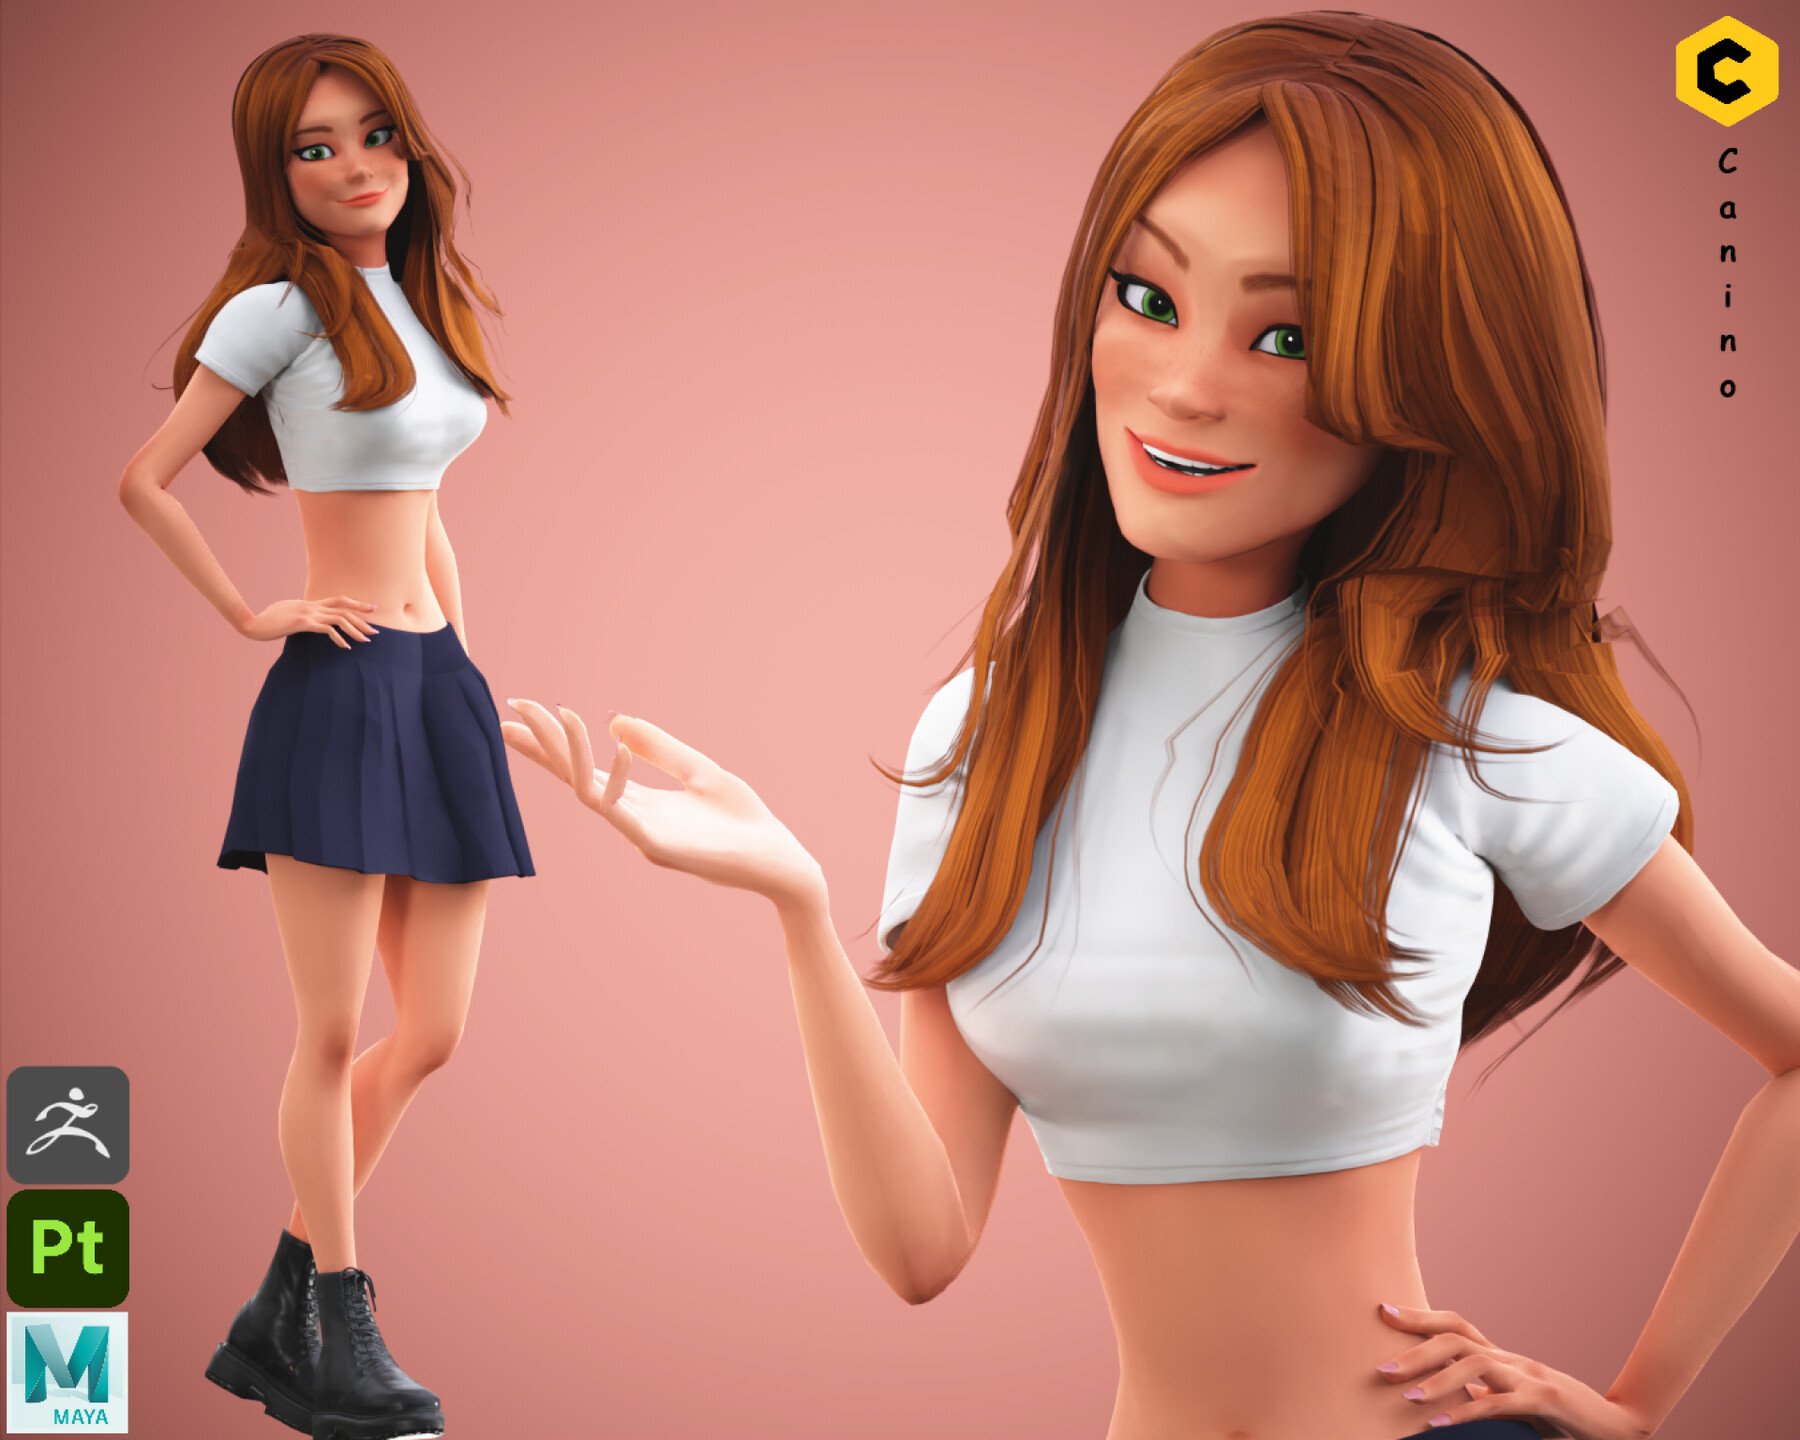 ArtStation - Stylized Cartoon Girl Character 3d model | Resources